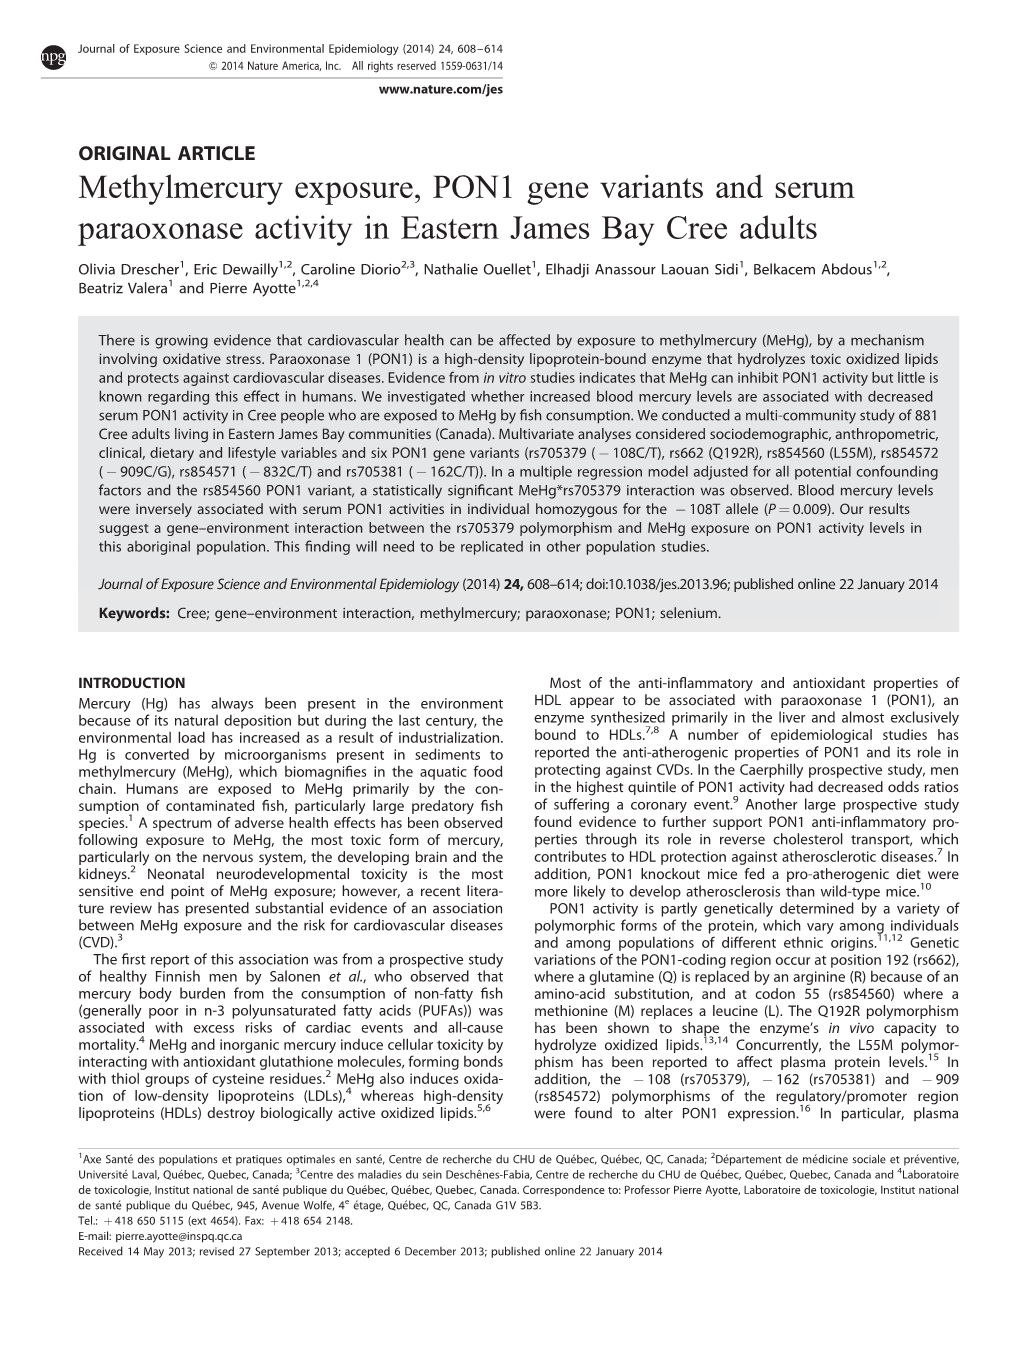 Methylmercury Exposure, PON1 Gene Variants and Serum Paraoxonase Activity in Eastern James Bay Cree Adults